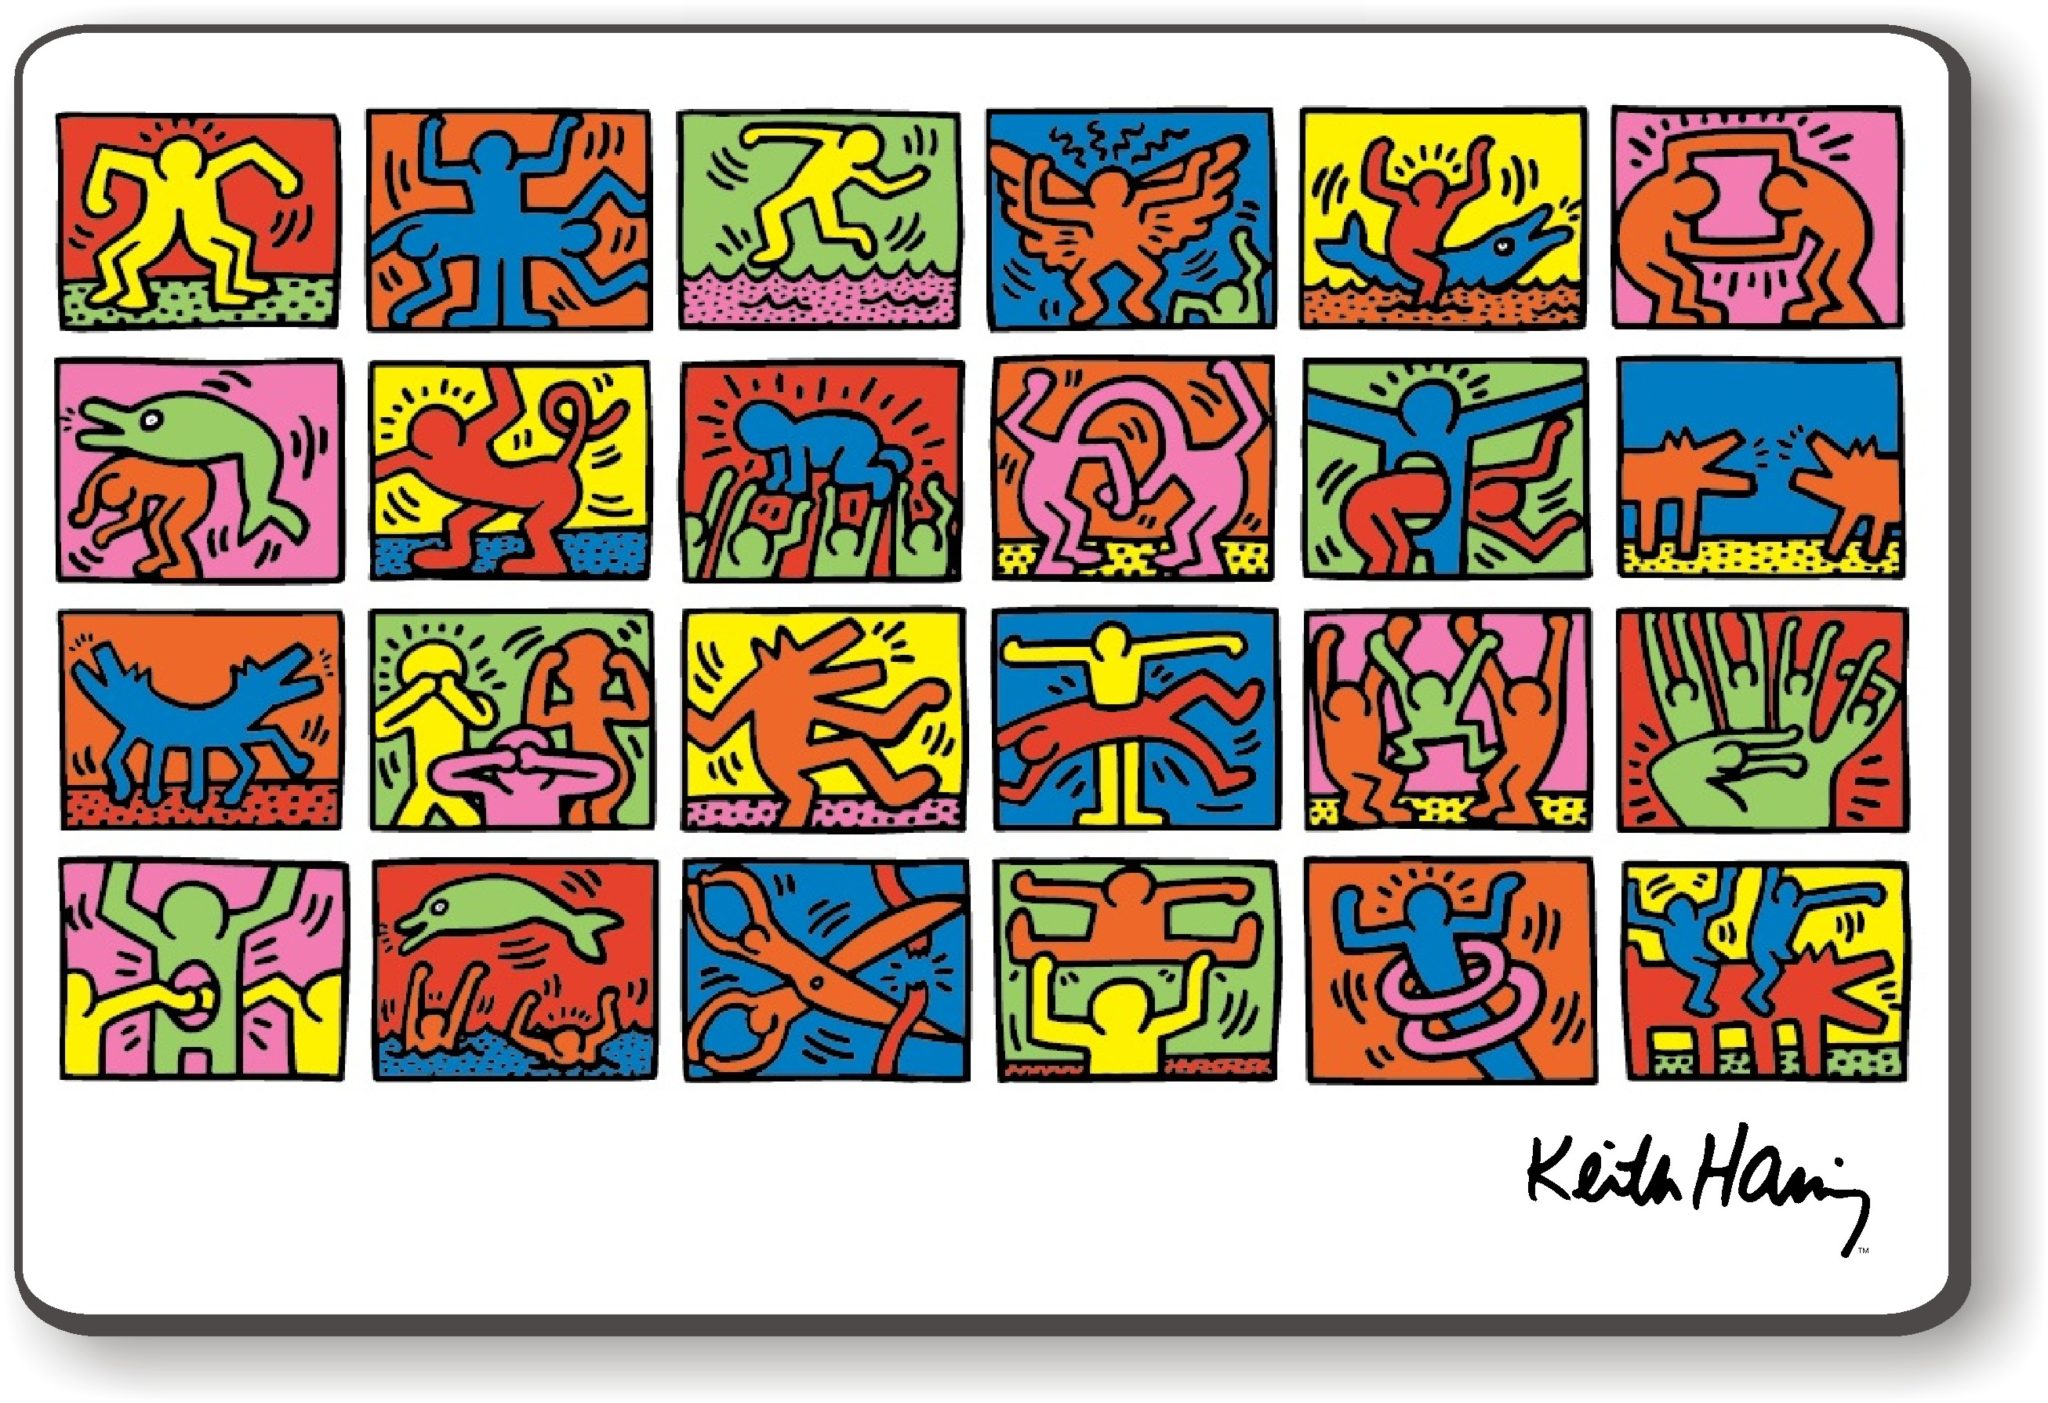 Keith Haring, le génie qui casse les codes du street art - Irawo